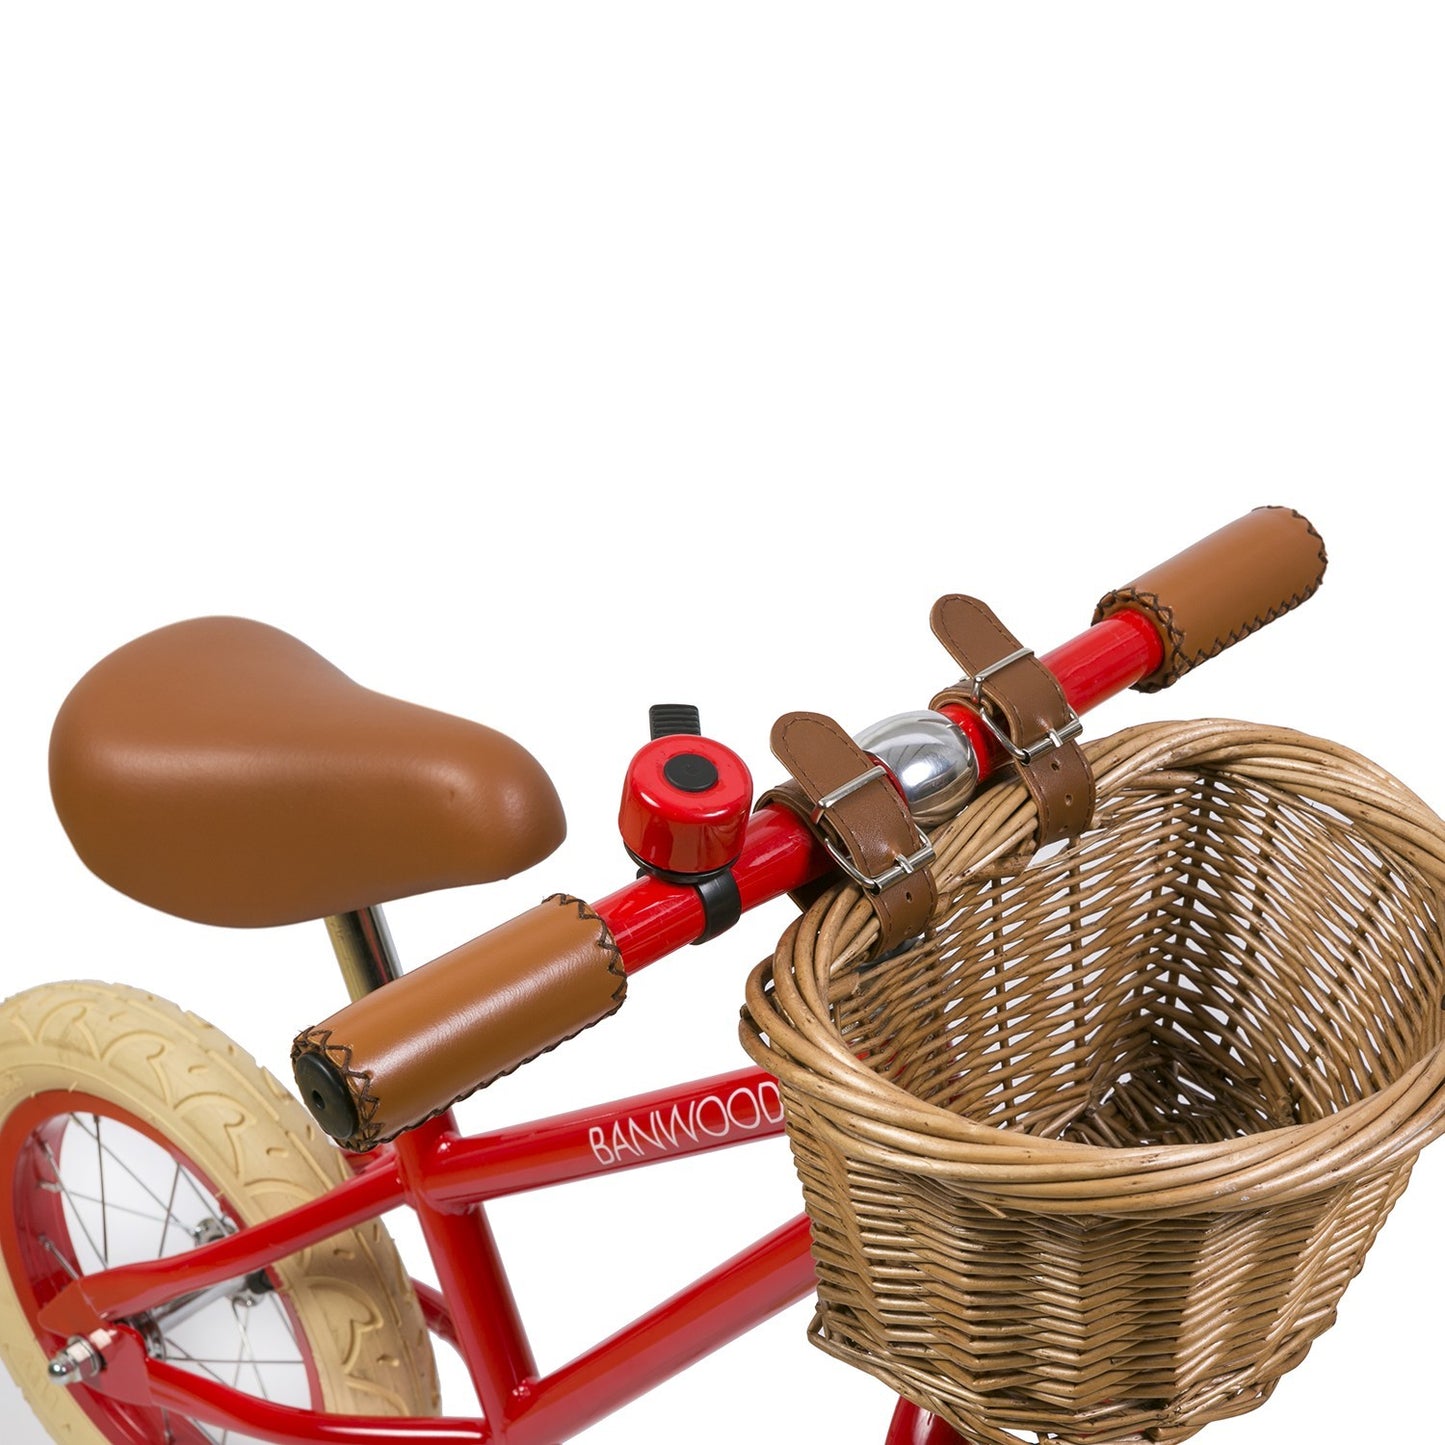 Banwood Balance Bike First Go (Red)